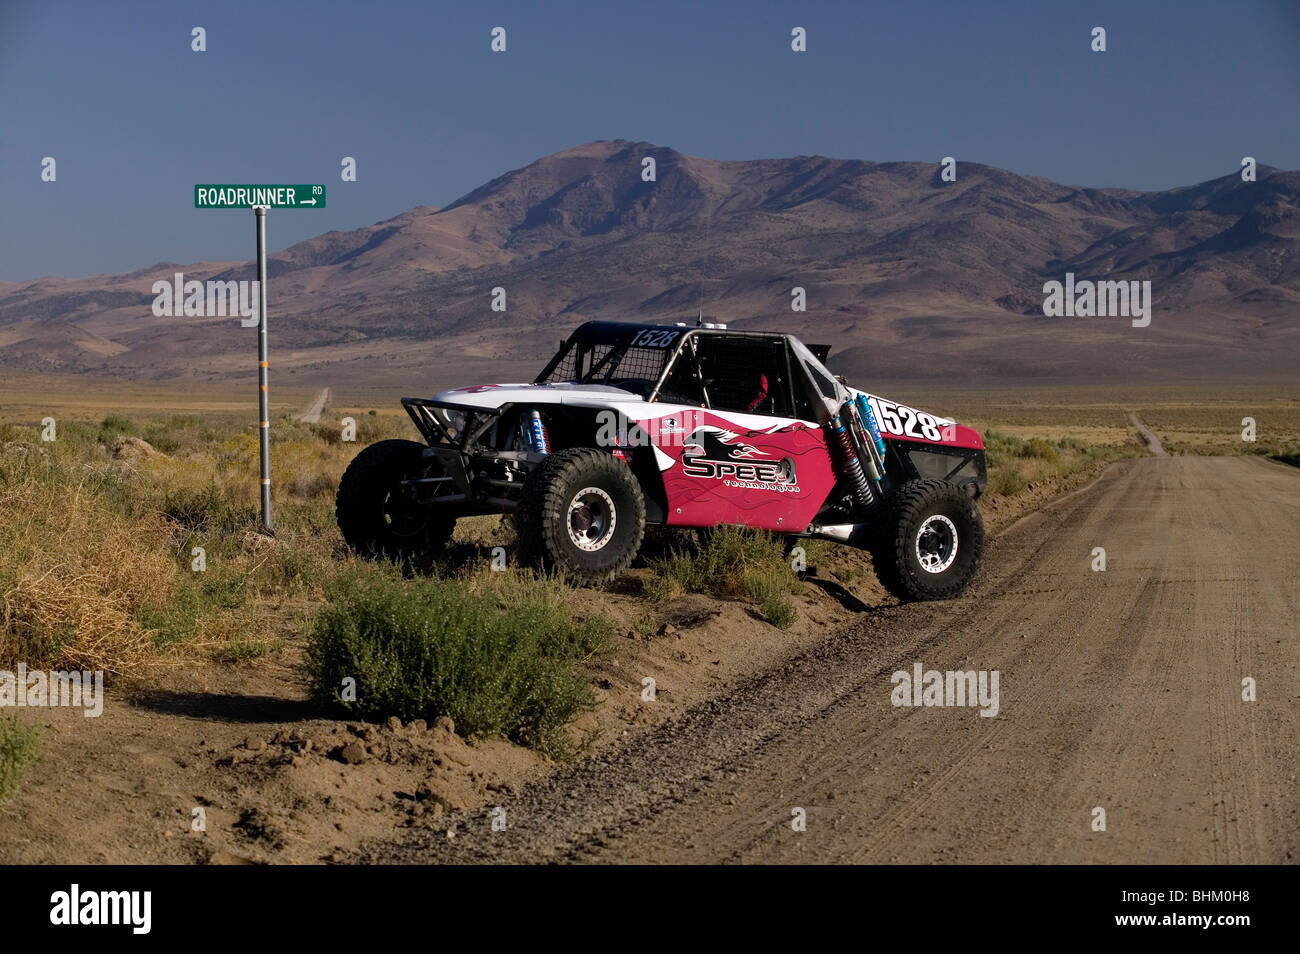 desert racing buggy